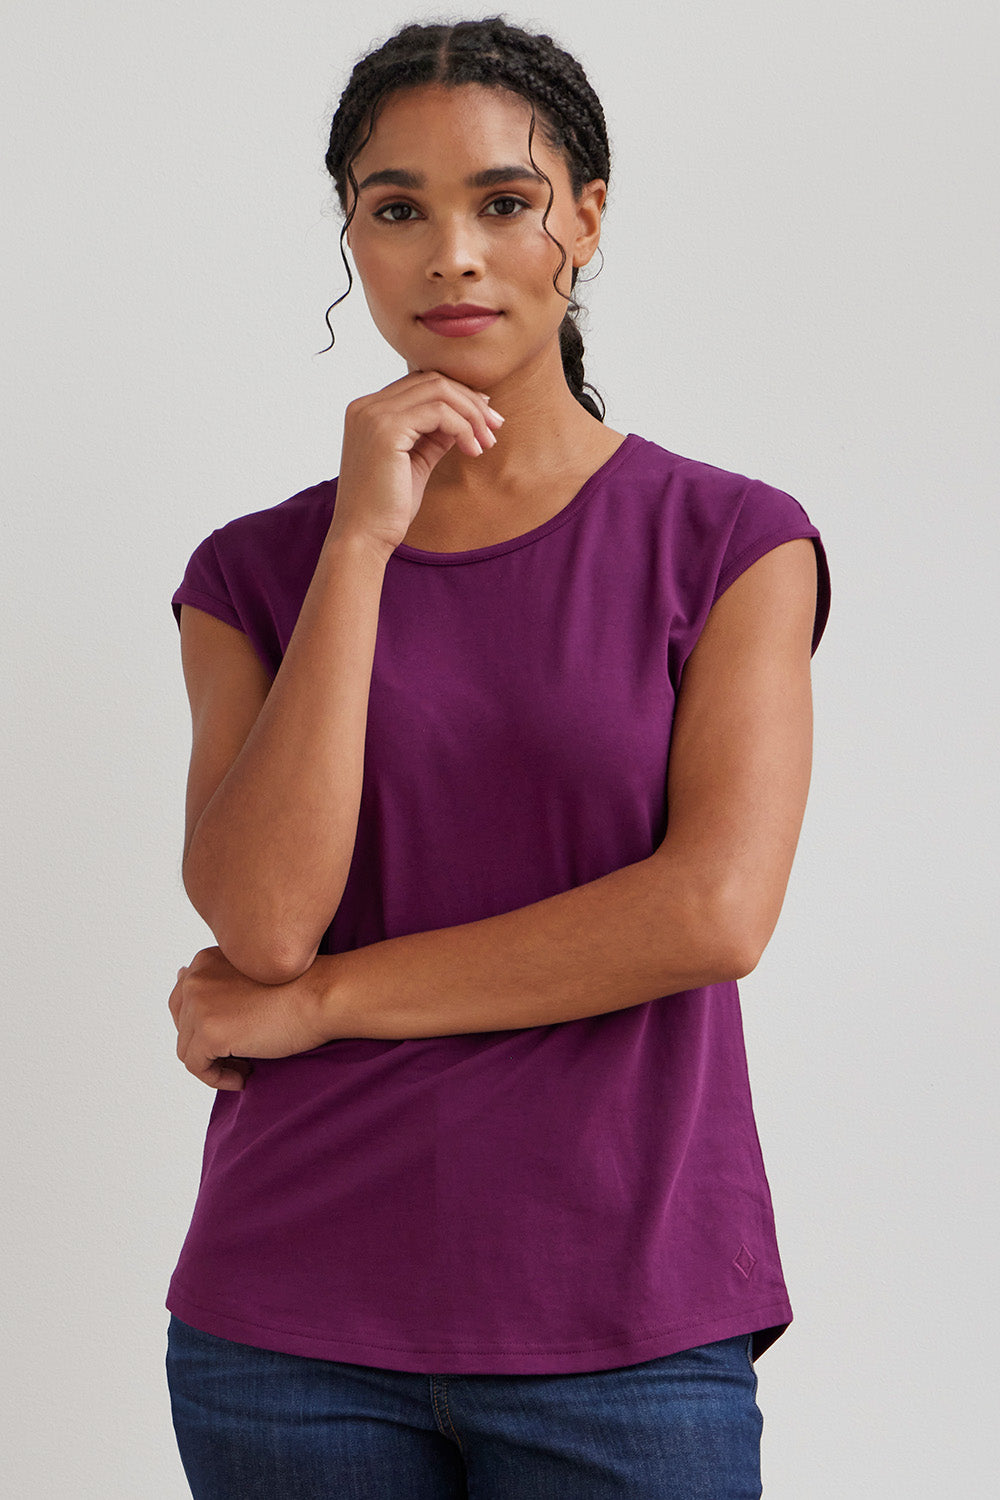 Women's Cap Sleeve Shirts | Easy Tees | Fair Indigo